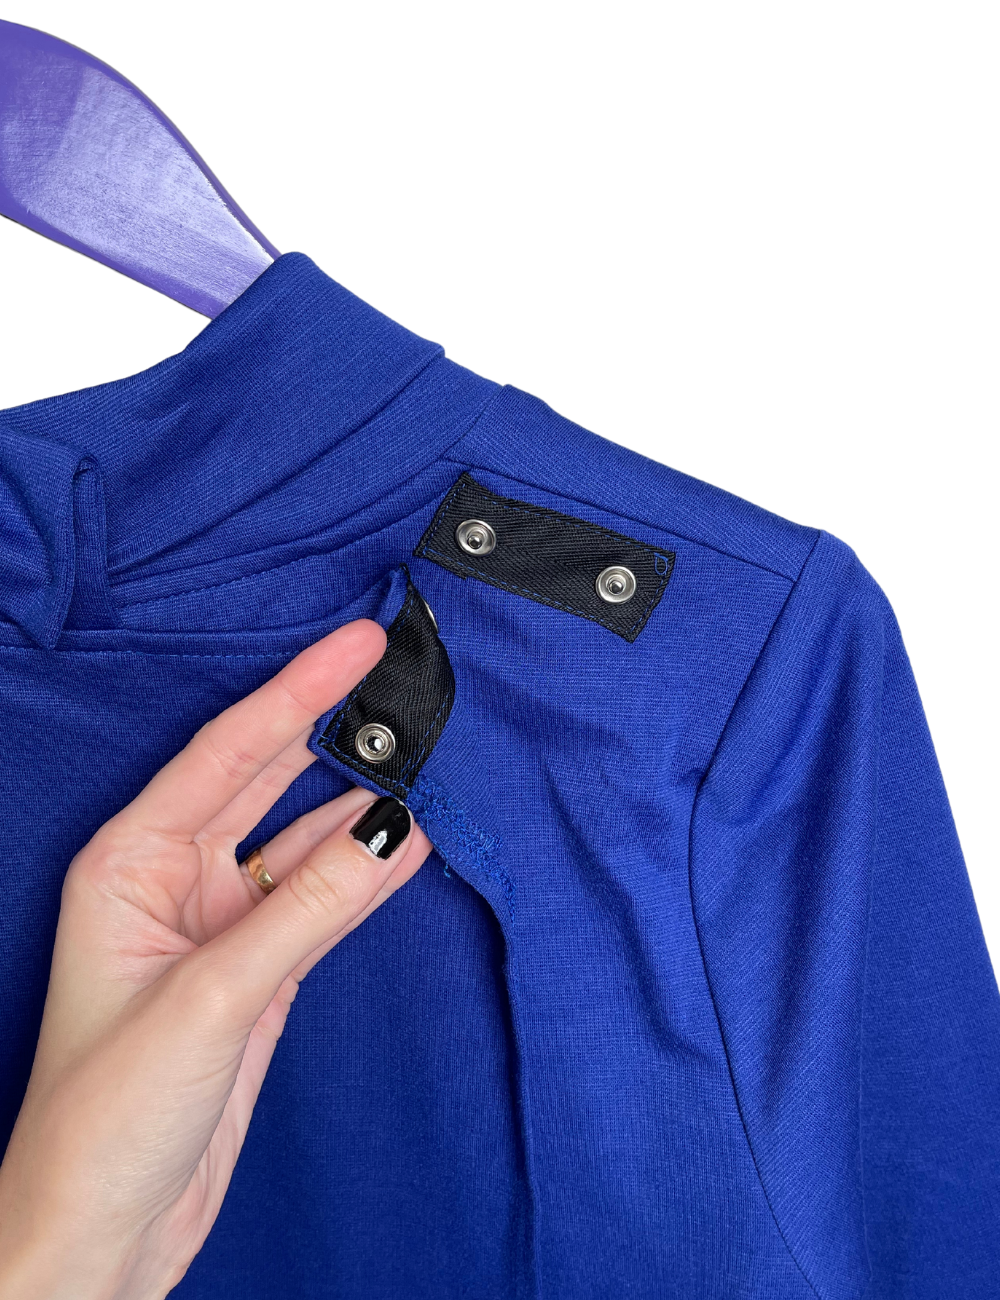 Adaptive Long Sleeve Dress with Pocket - Cobalt Blue